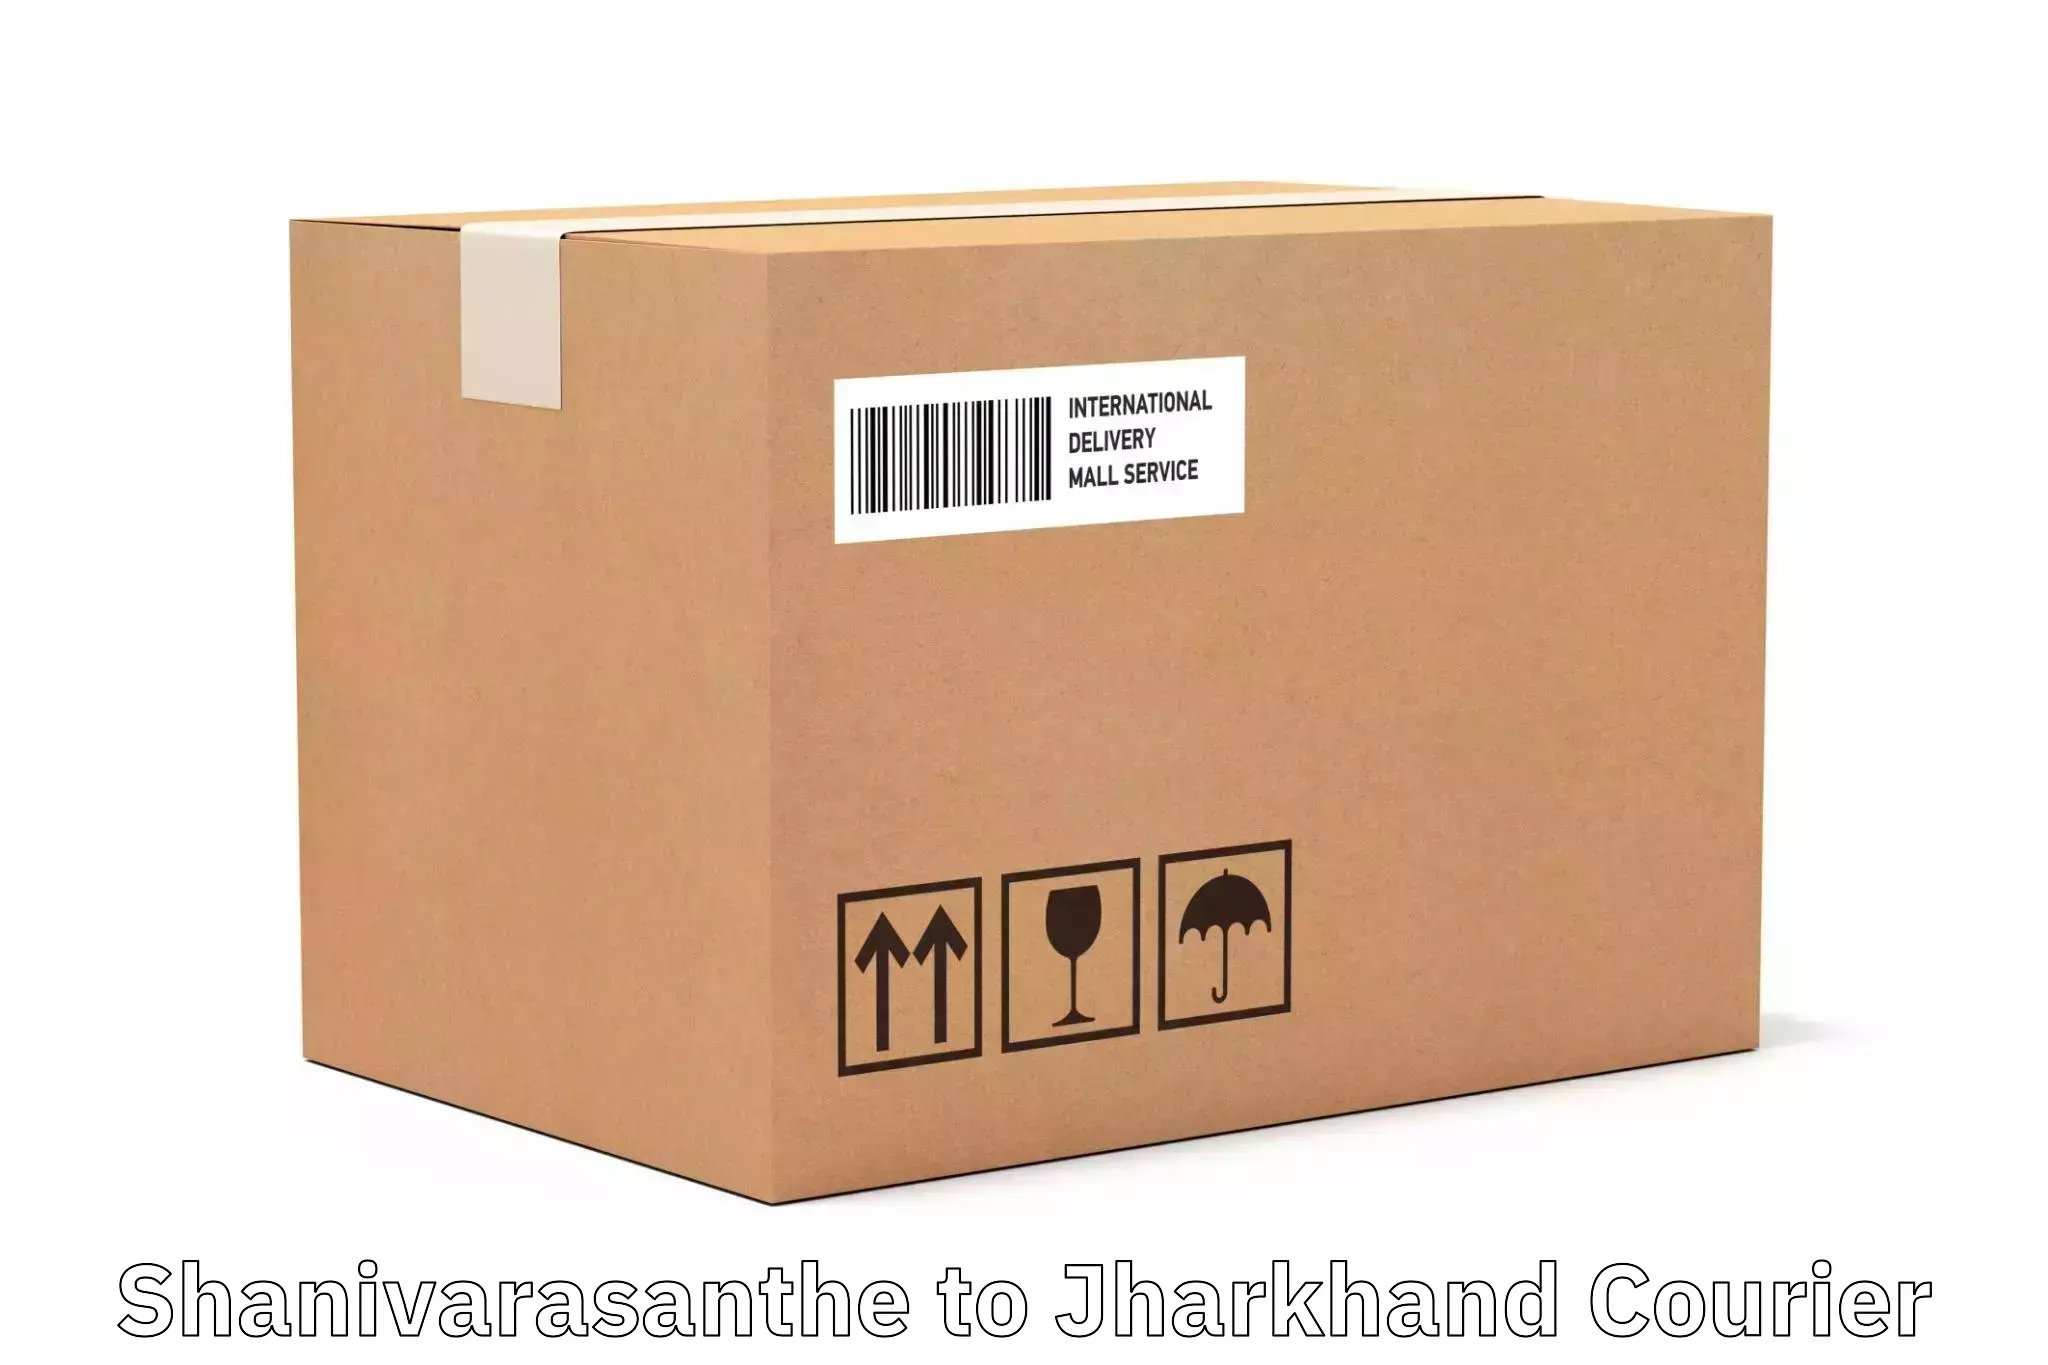 State-of-the-art courier technology Shanivarasanthe to Medininagar